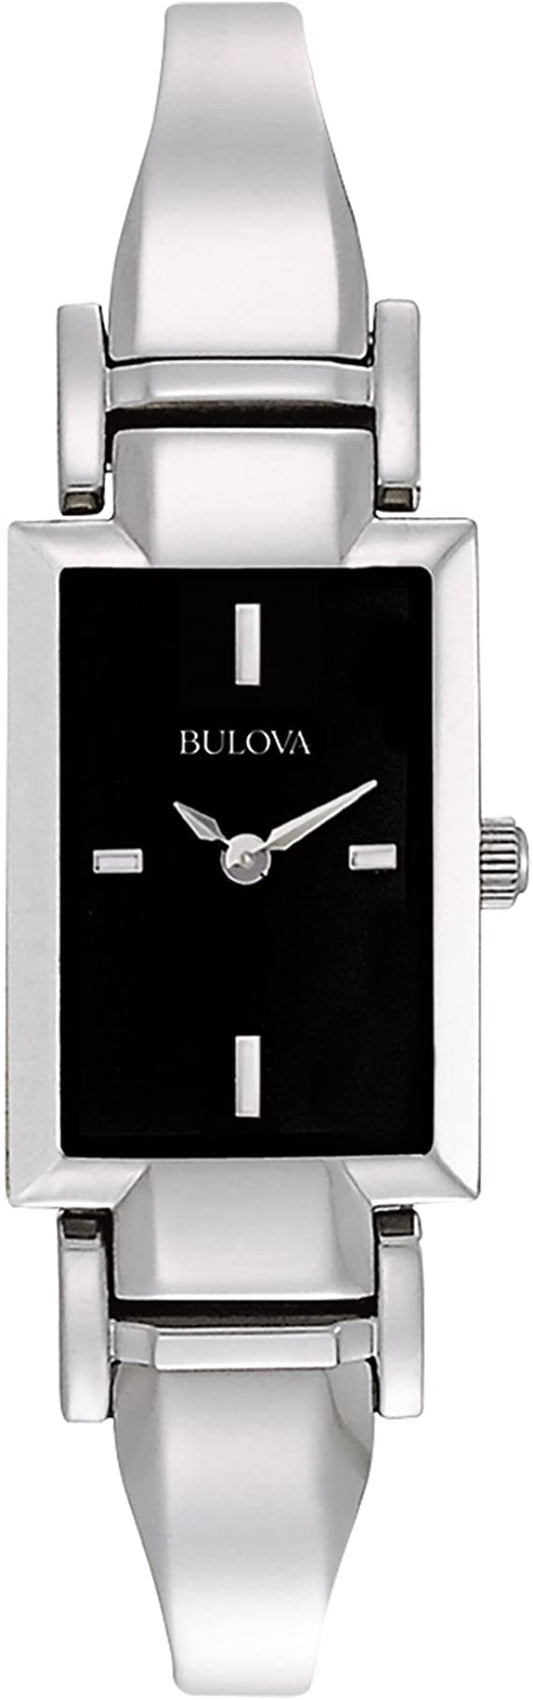 Bulova Stainless Steel Rectangular Watch